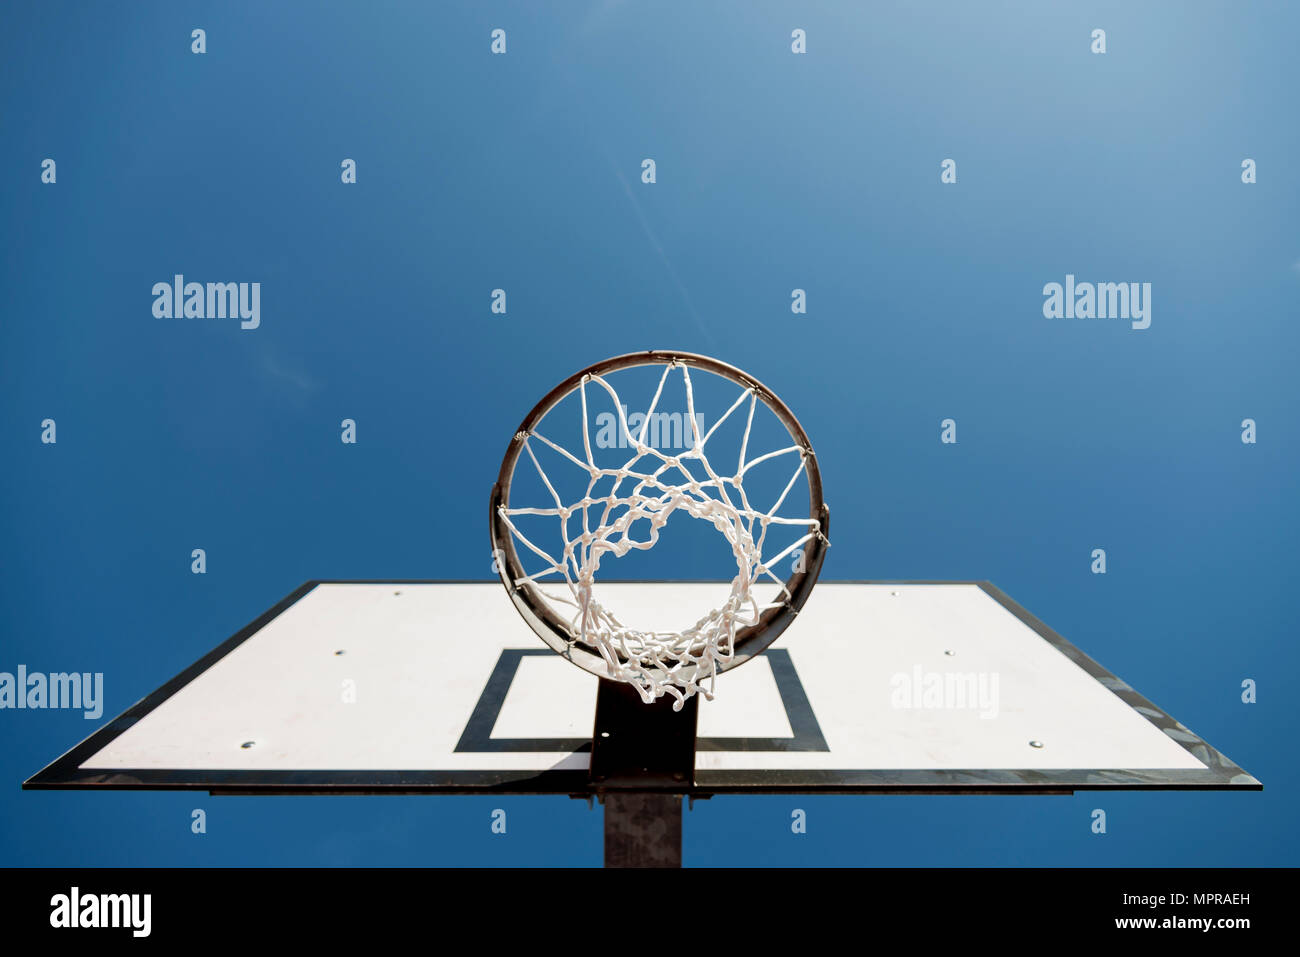 Basketball hoop against blue sky Stock Photo